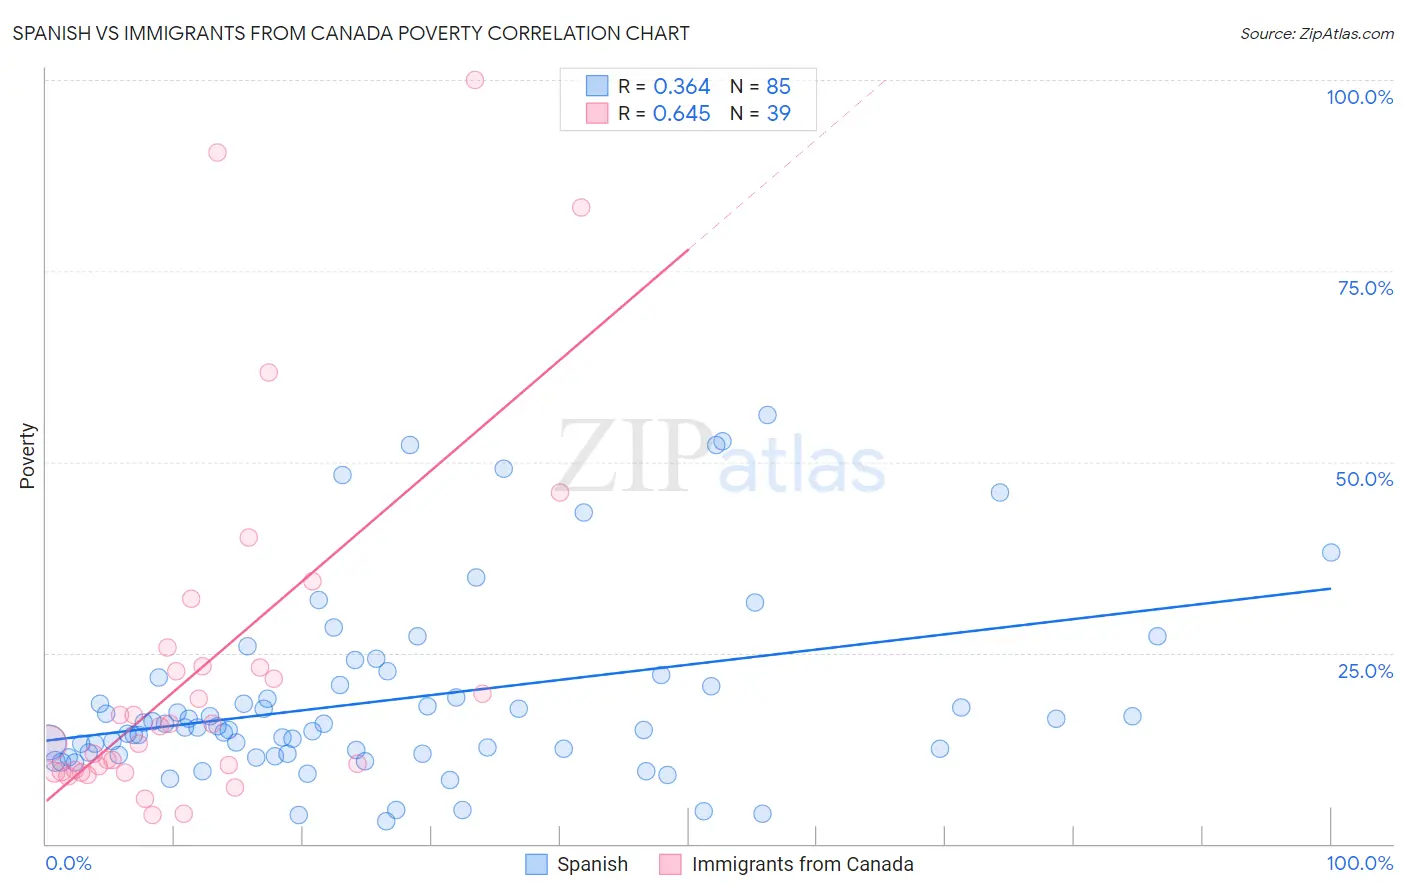 Spanish vs Immigrants from Canada Poverty